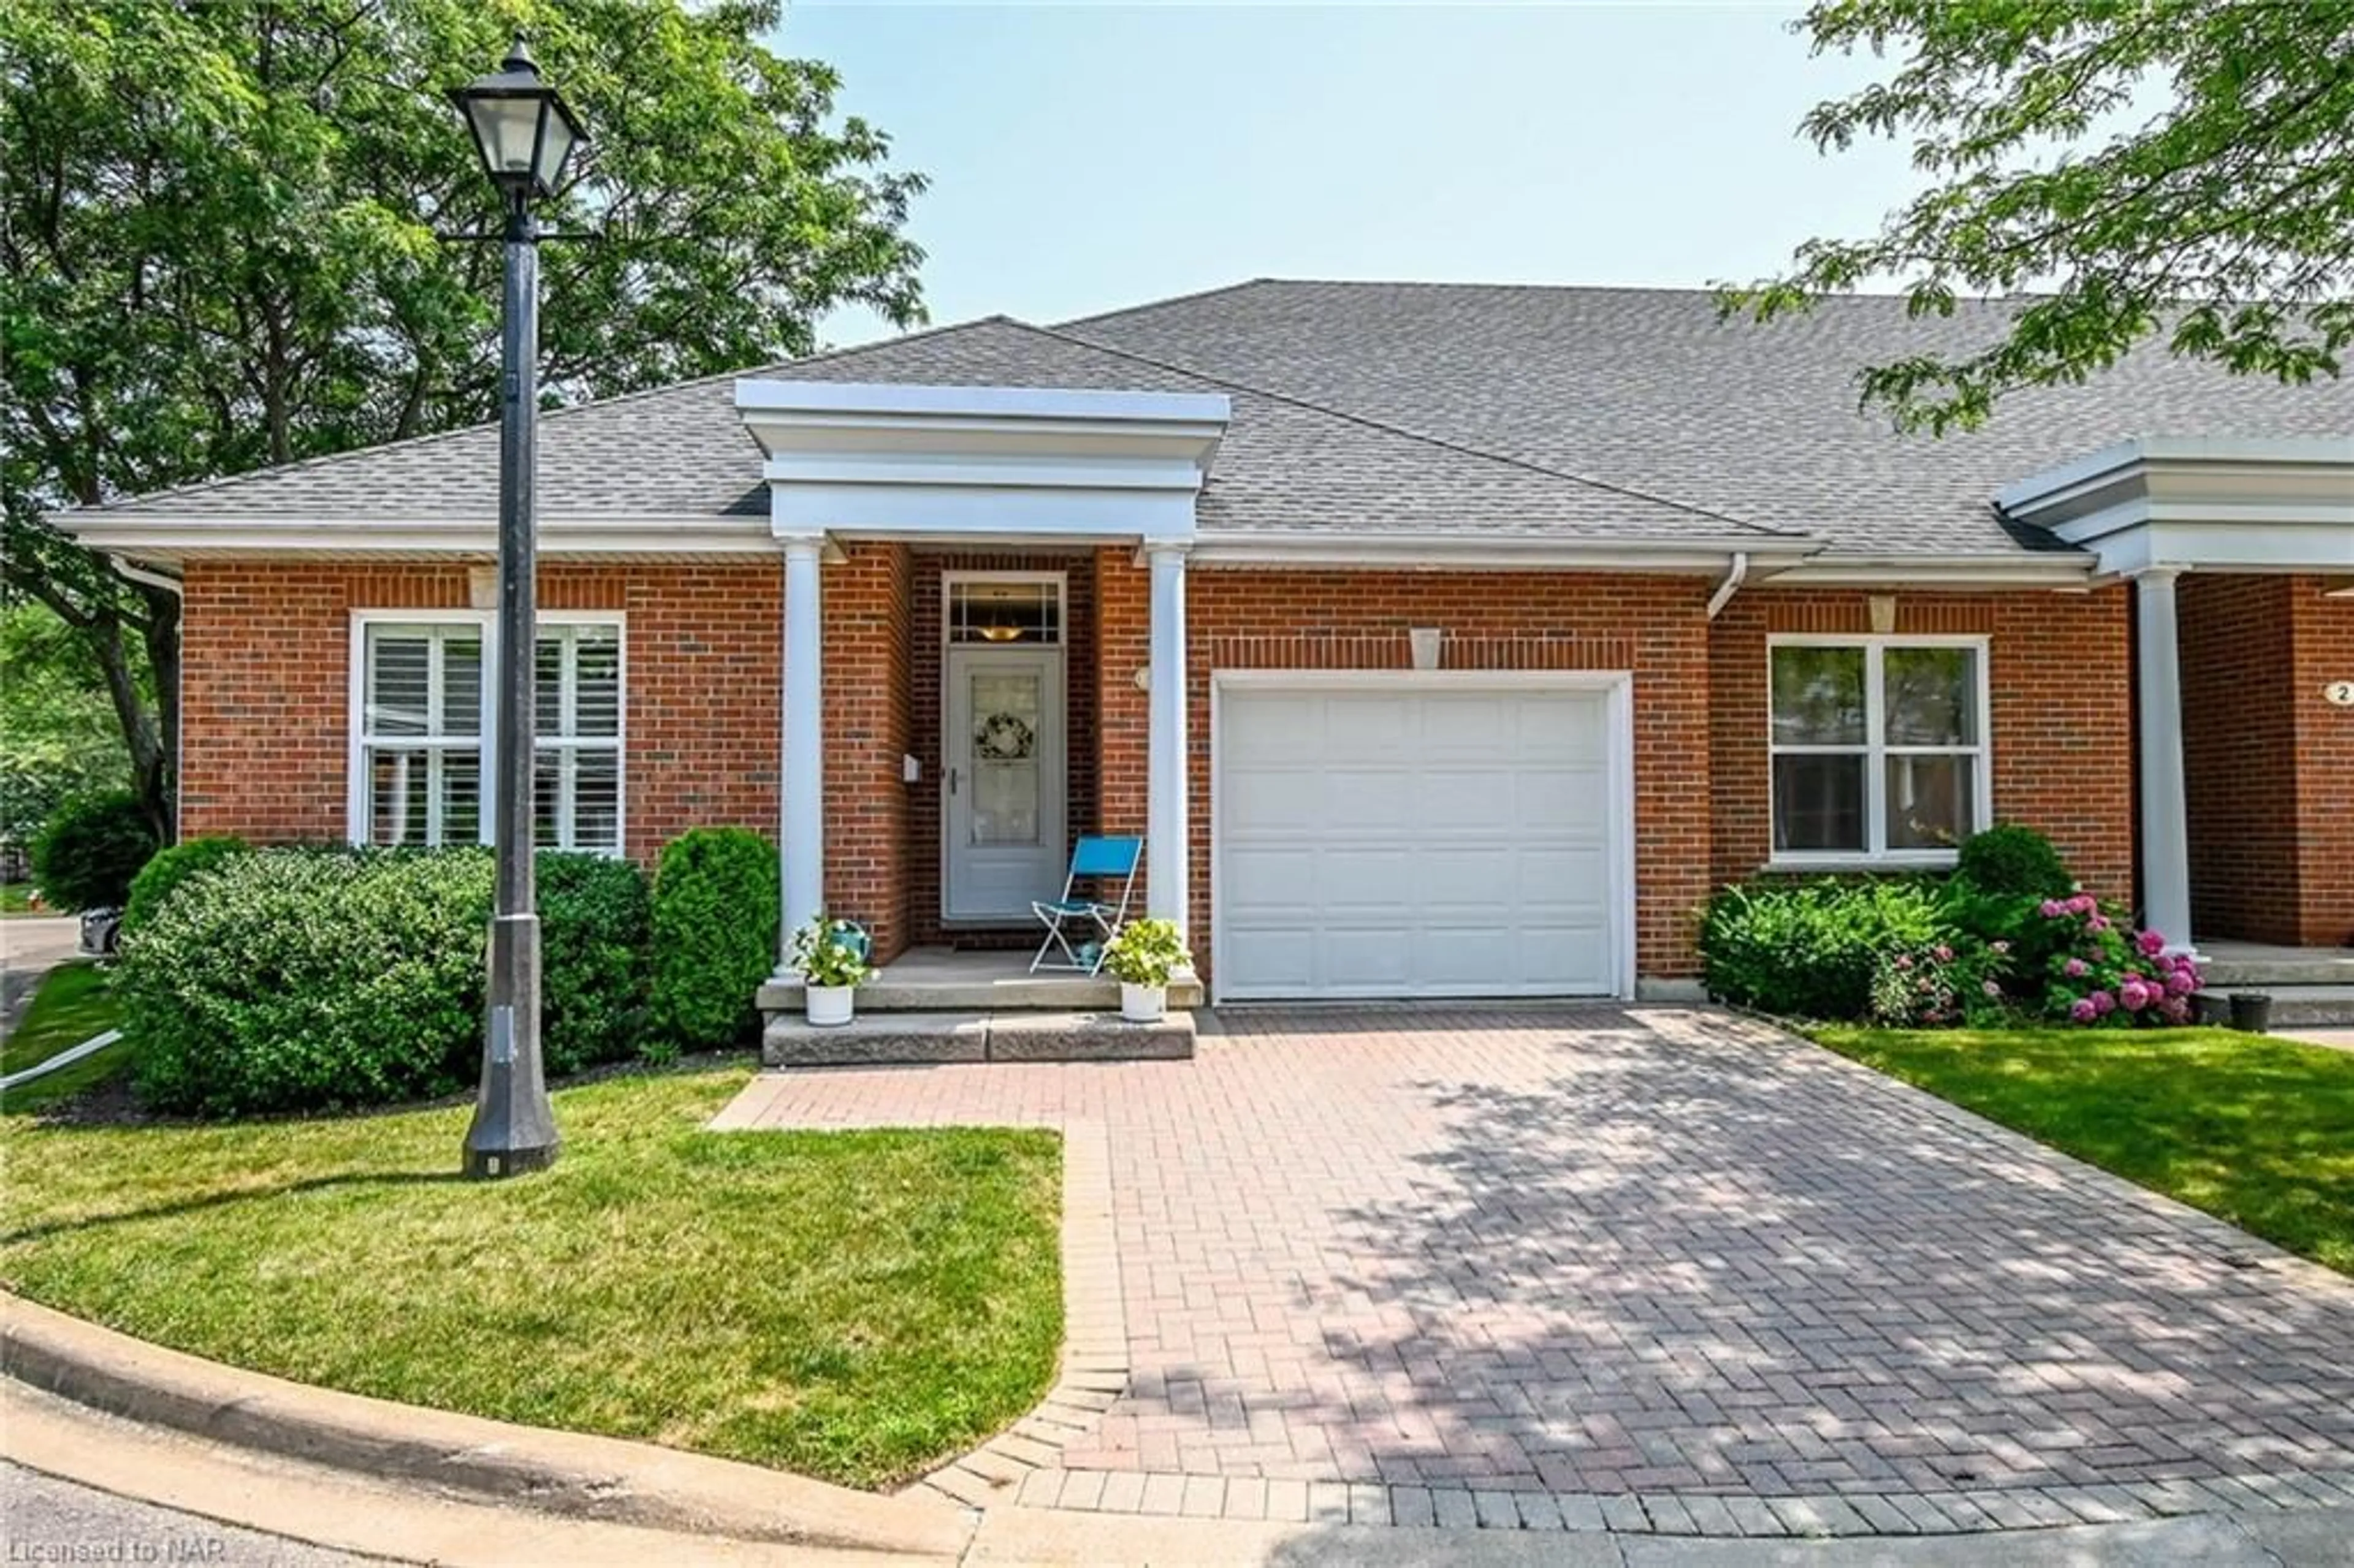 Home with brick exterior material for 3381 Montrose Rd #1, Niagara Falls Ontario L2H 0J9